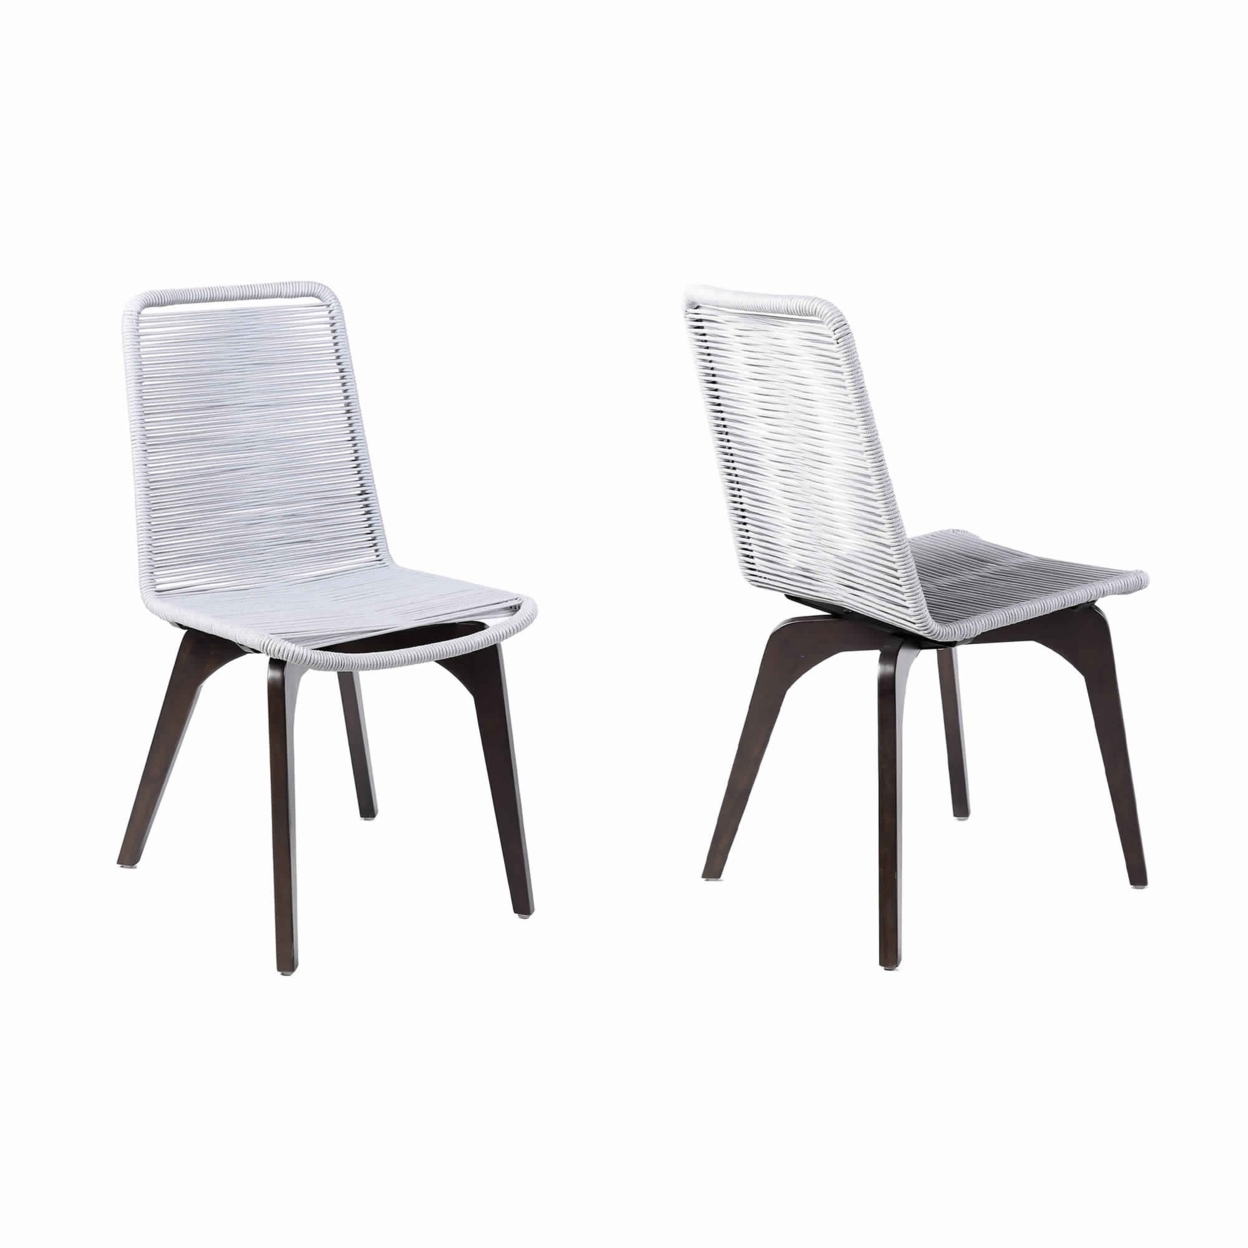 Wooden Outdoor Dining Chair With Fishbone Weave, Set Of 2, Dark Brown- Saltoro Sherpi